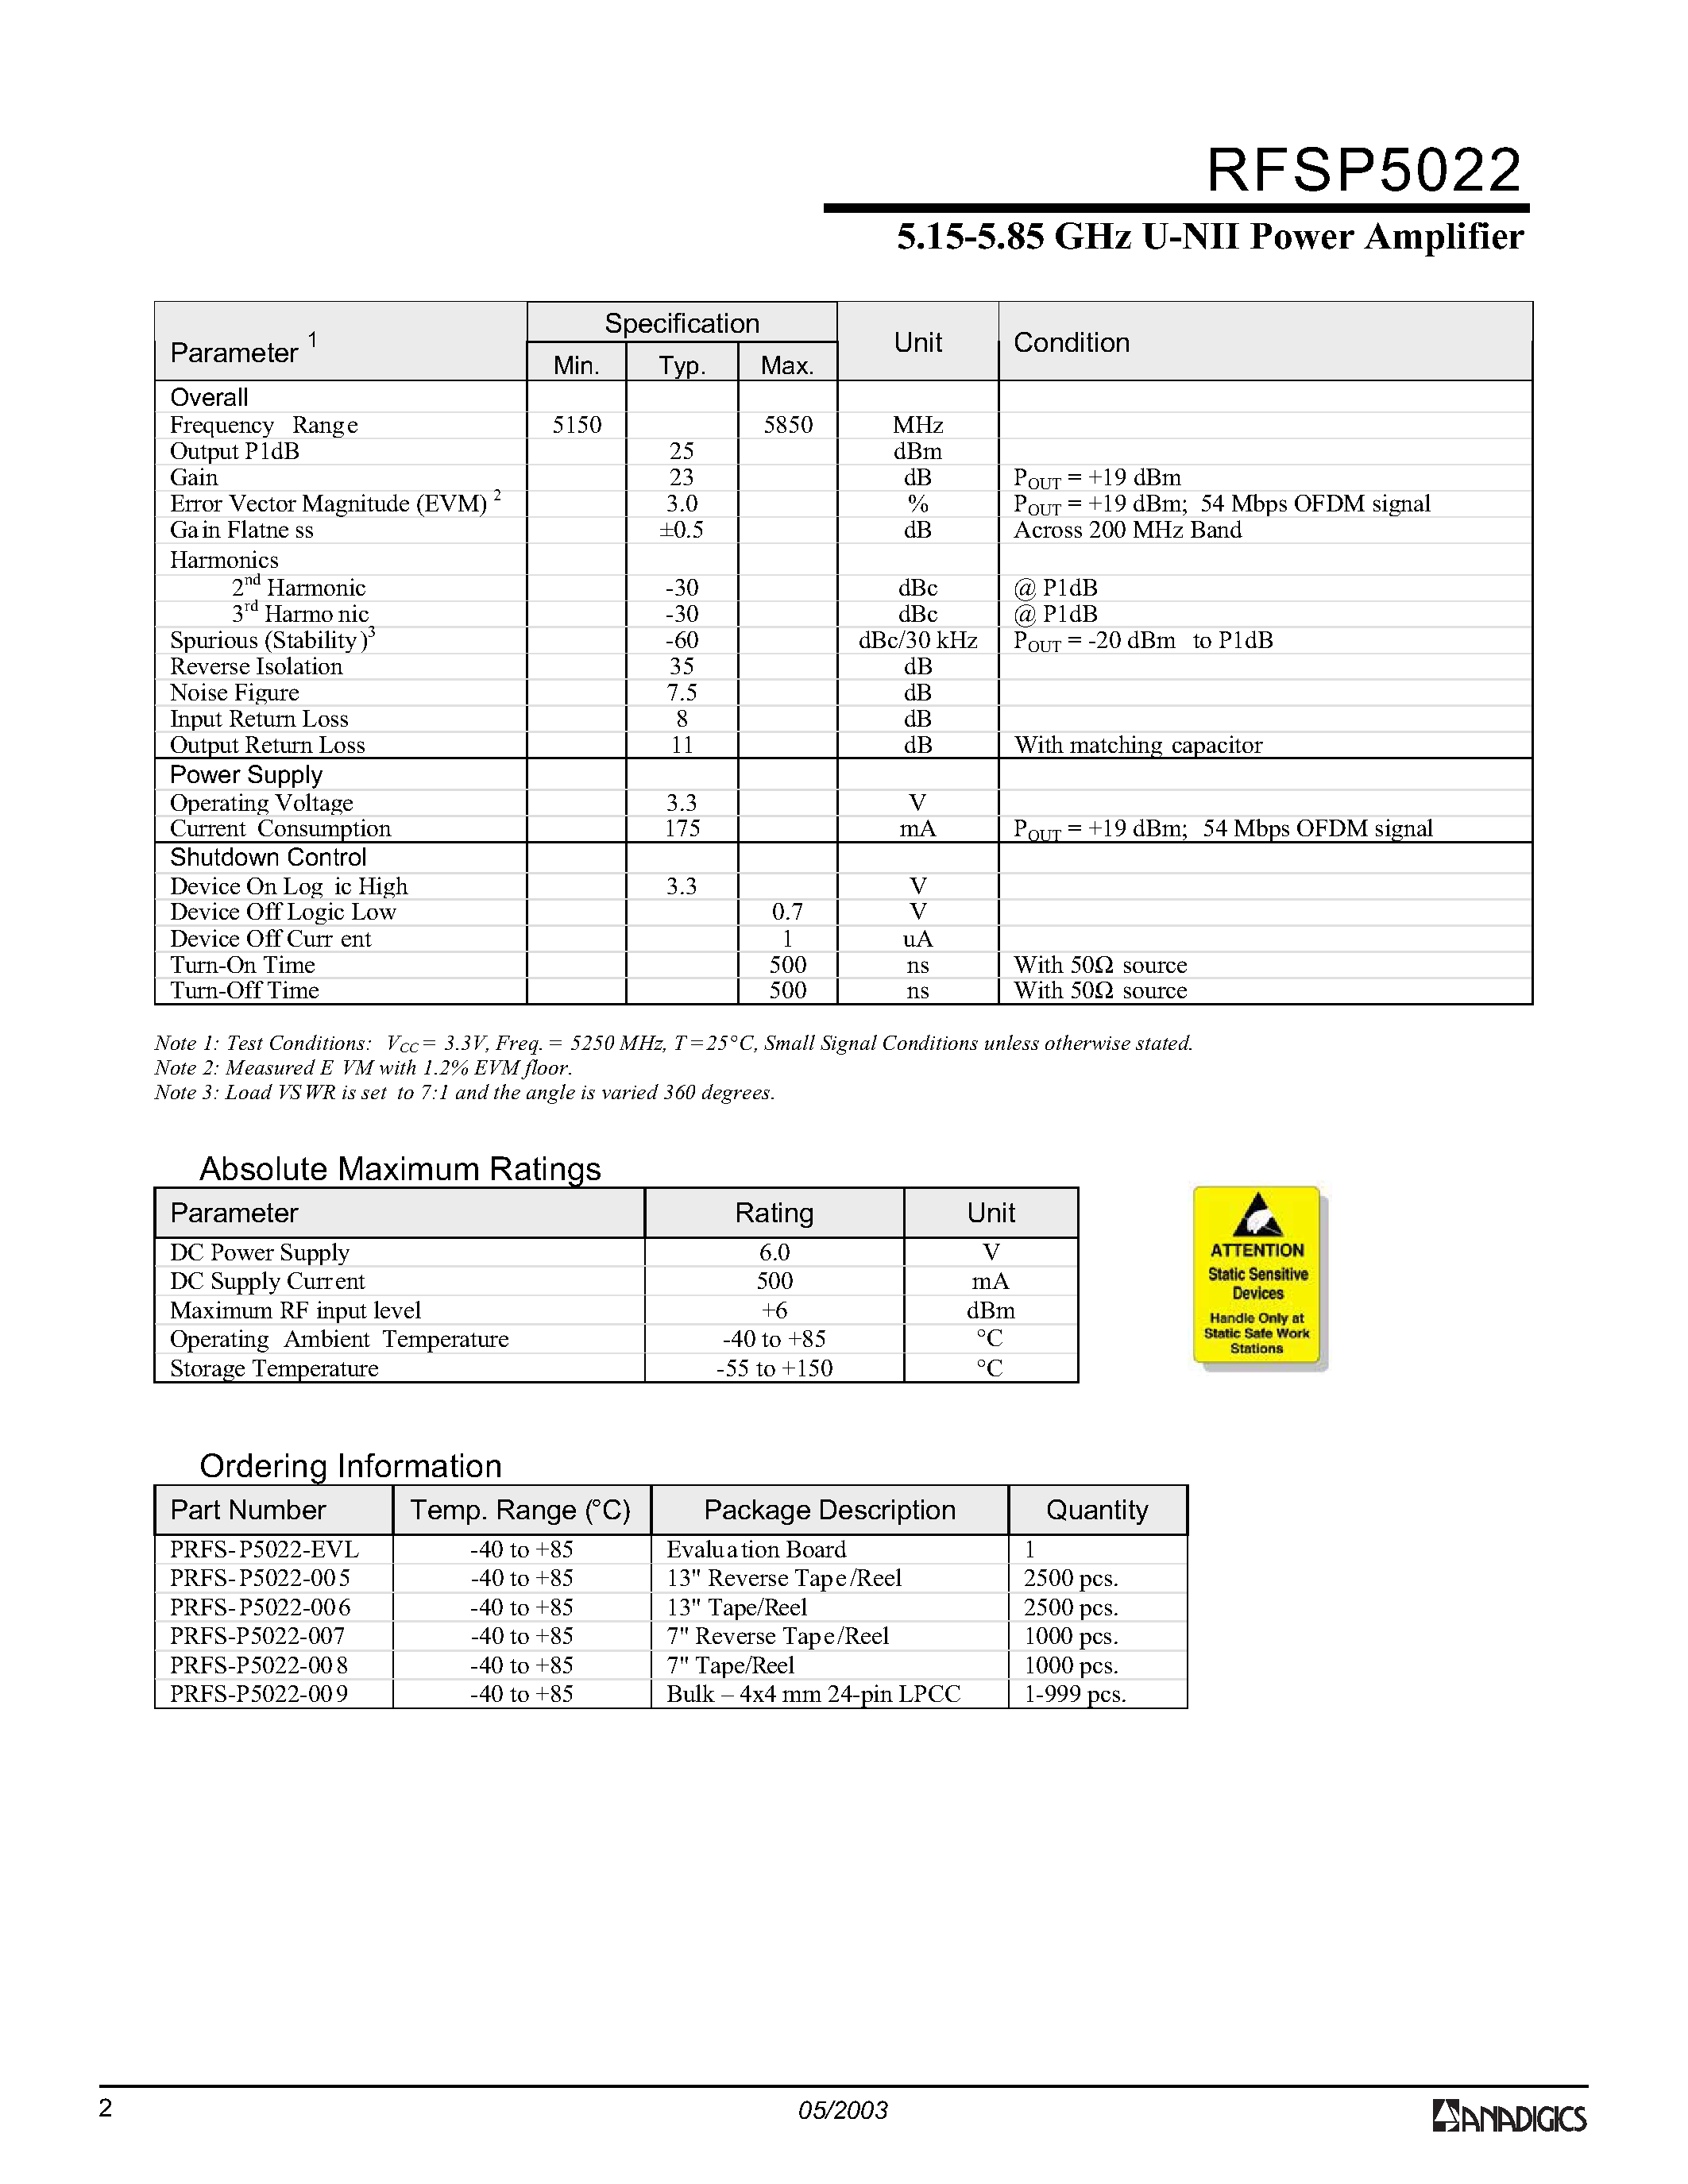 Даташит PRFS-P5022-006 - 5.15-5.85 GHz U-NII Power Amplifier страница 2